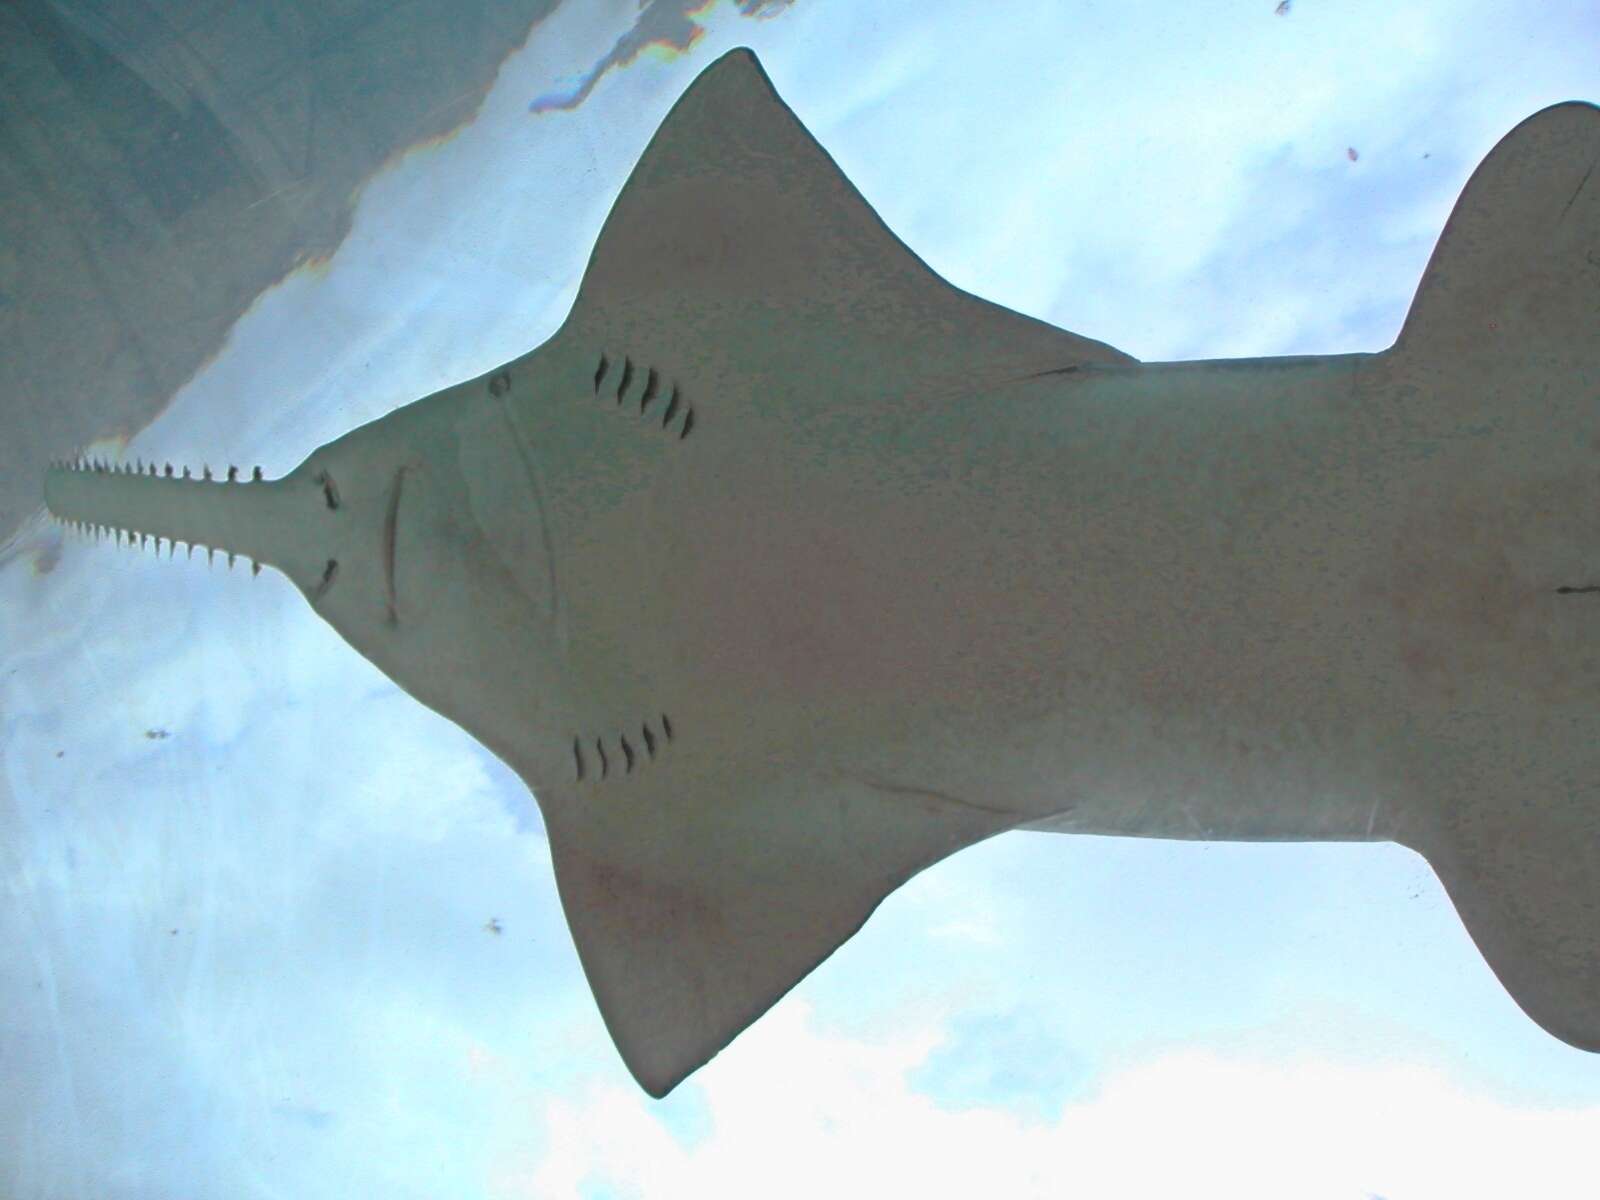 Image of Smalltooth Sawfish